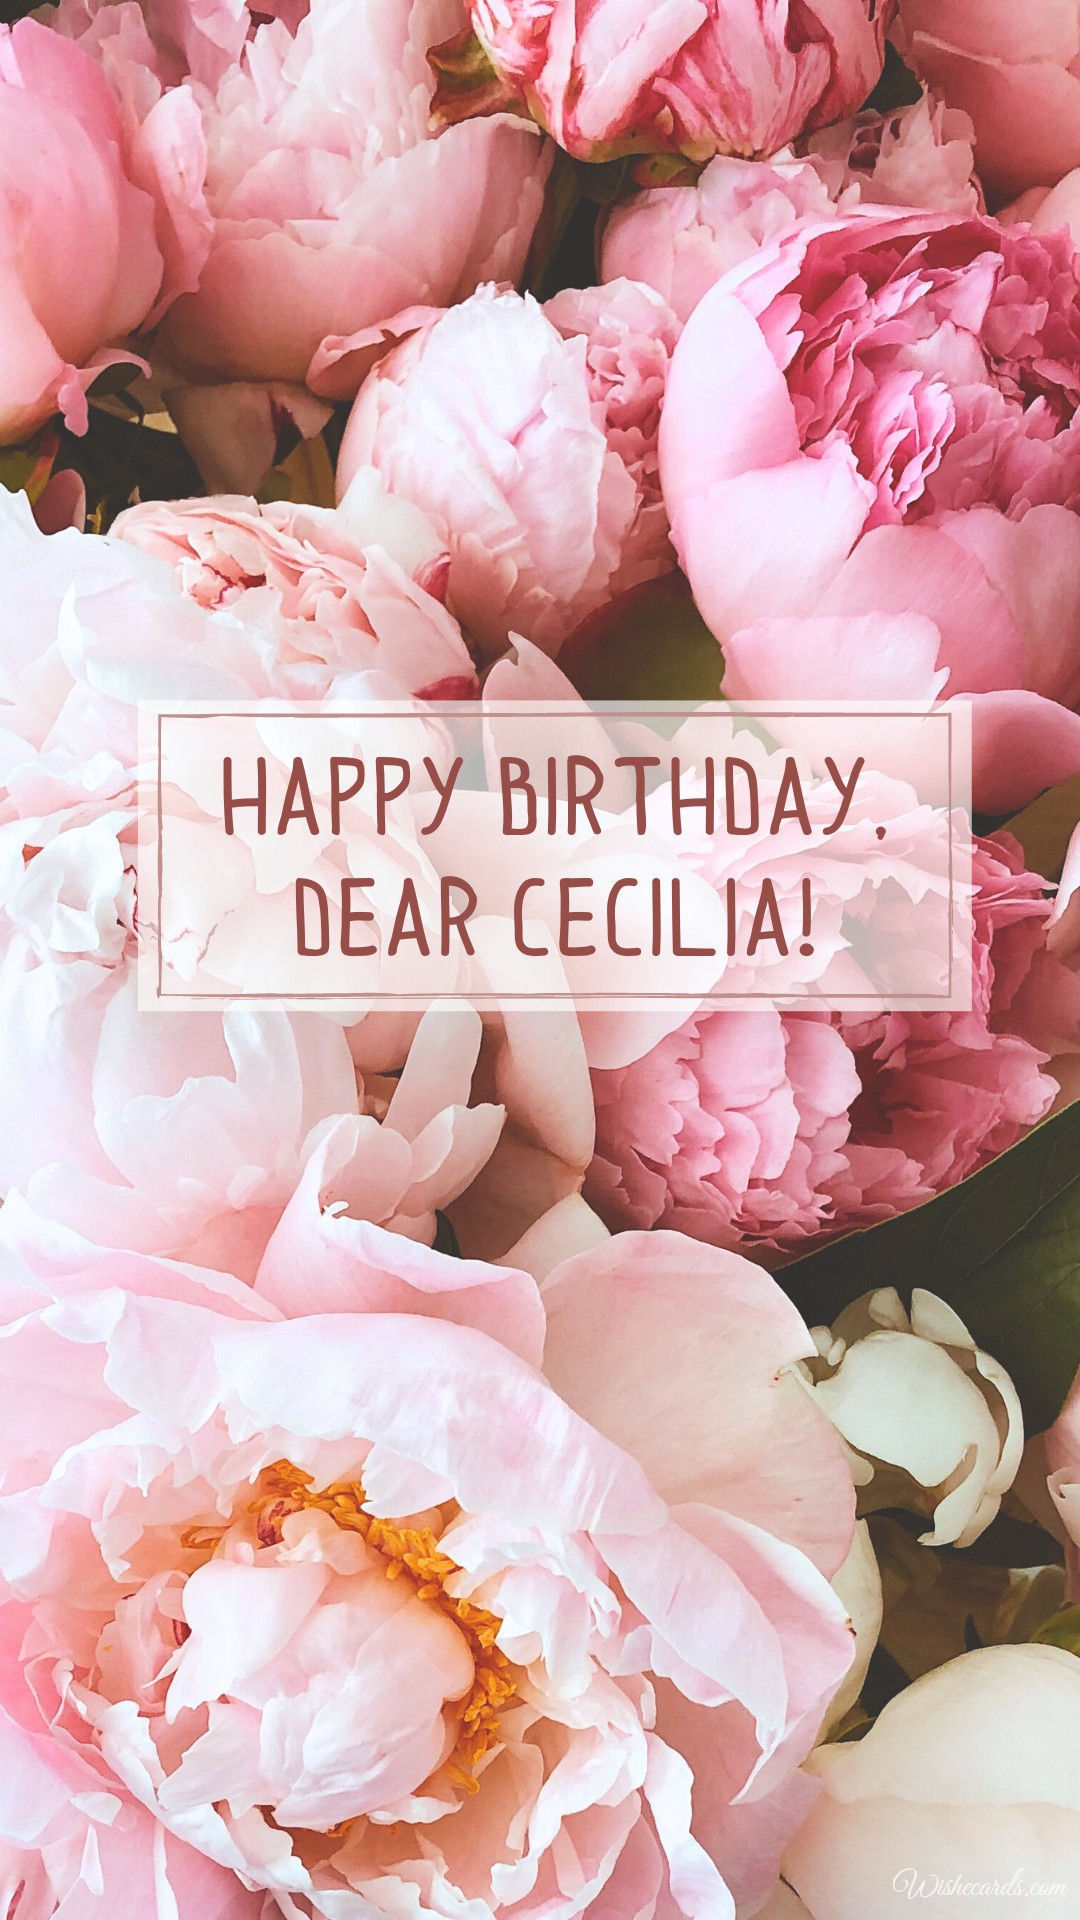 Happy Birthday to Cecilia